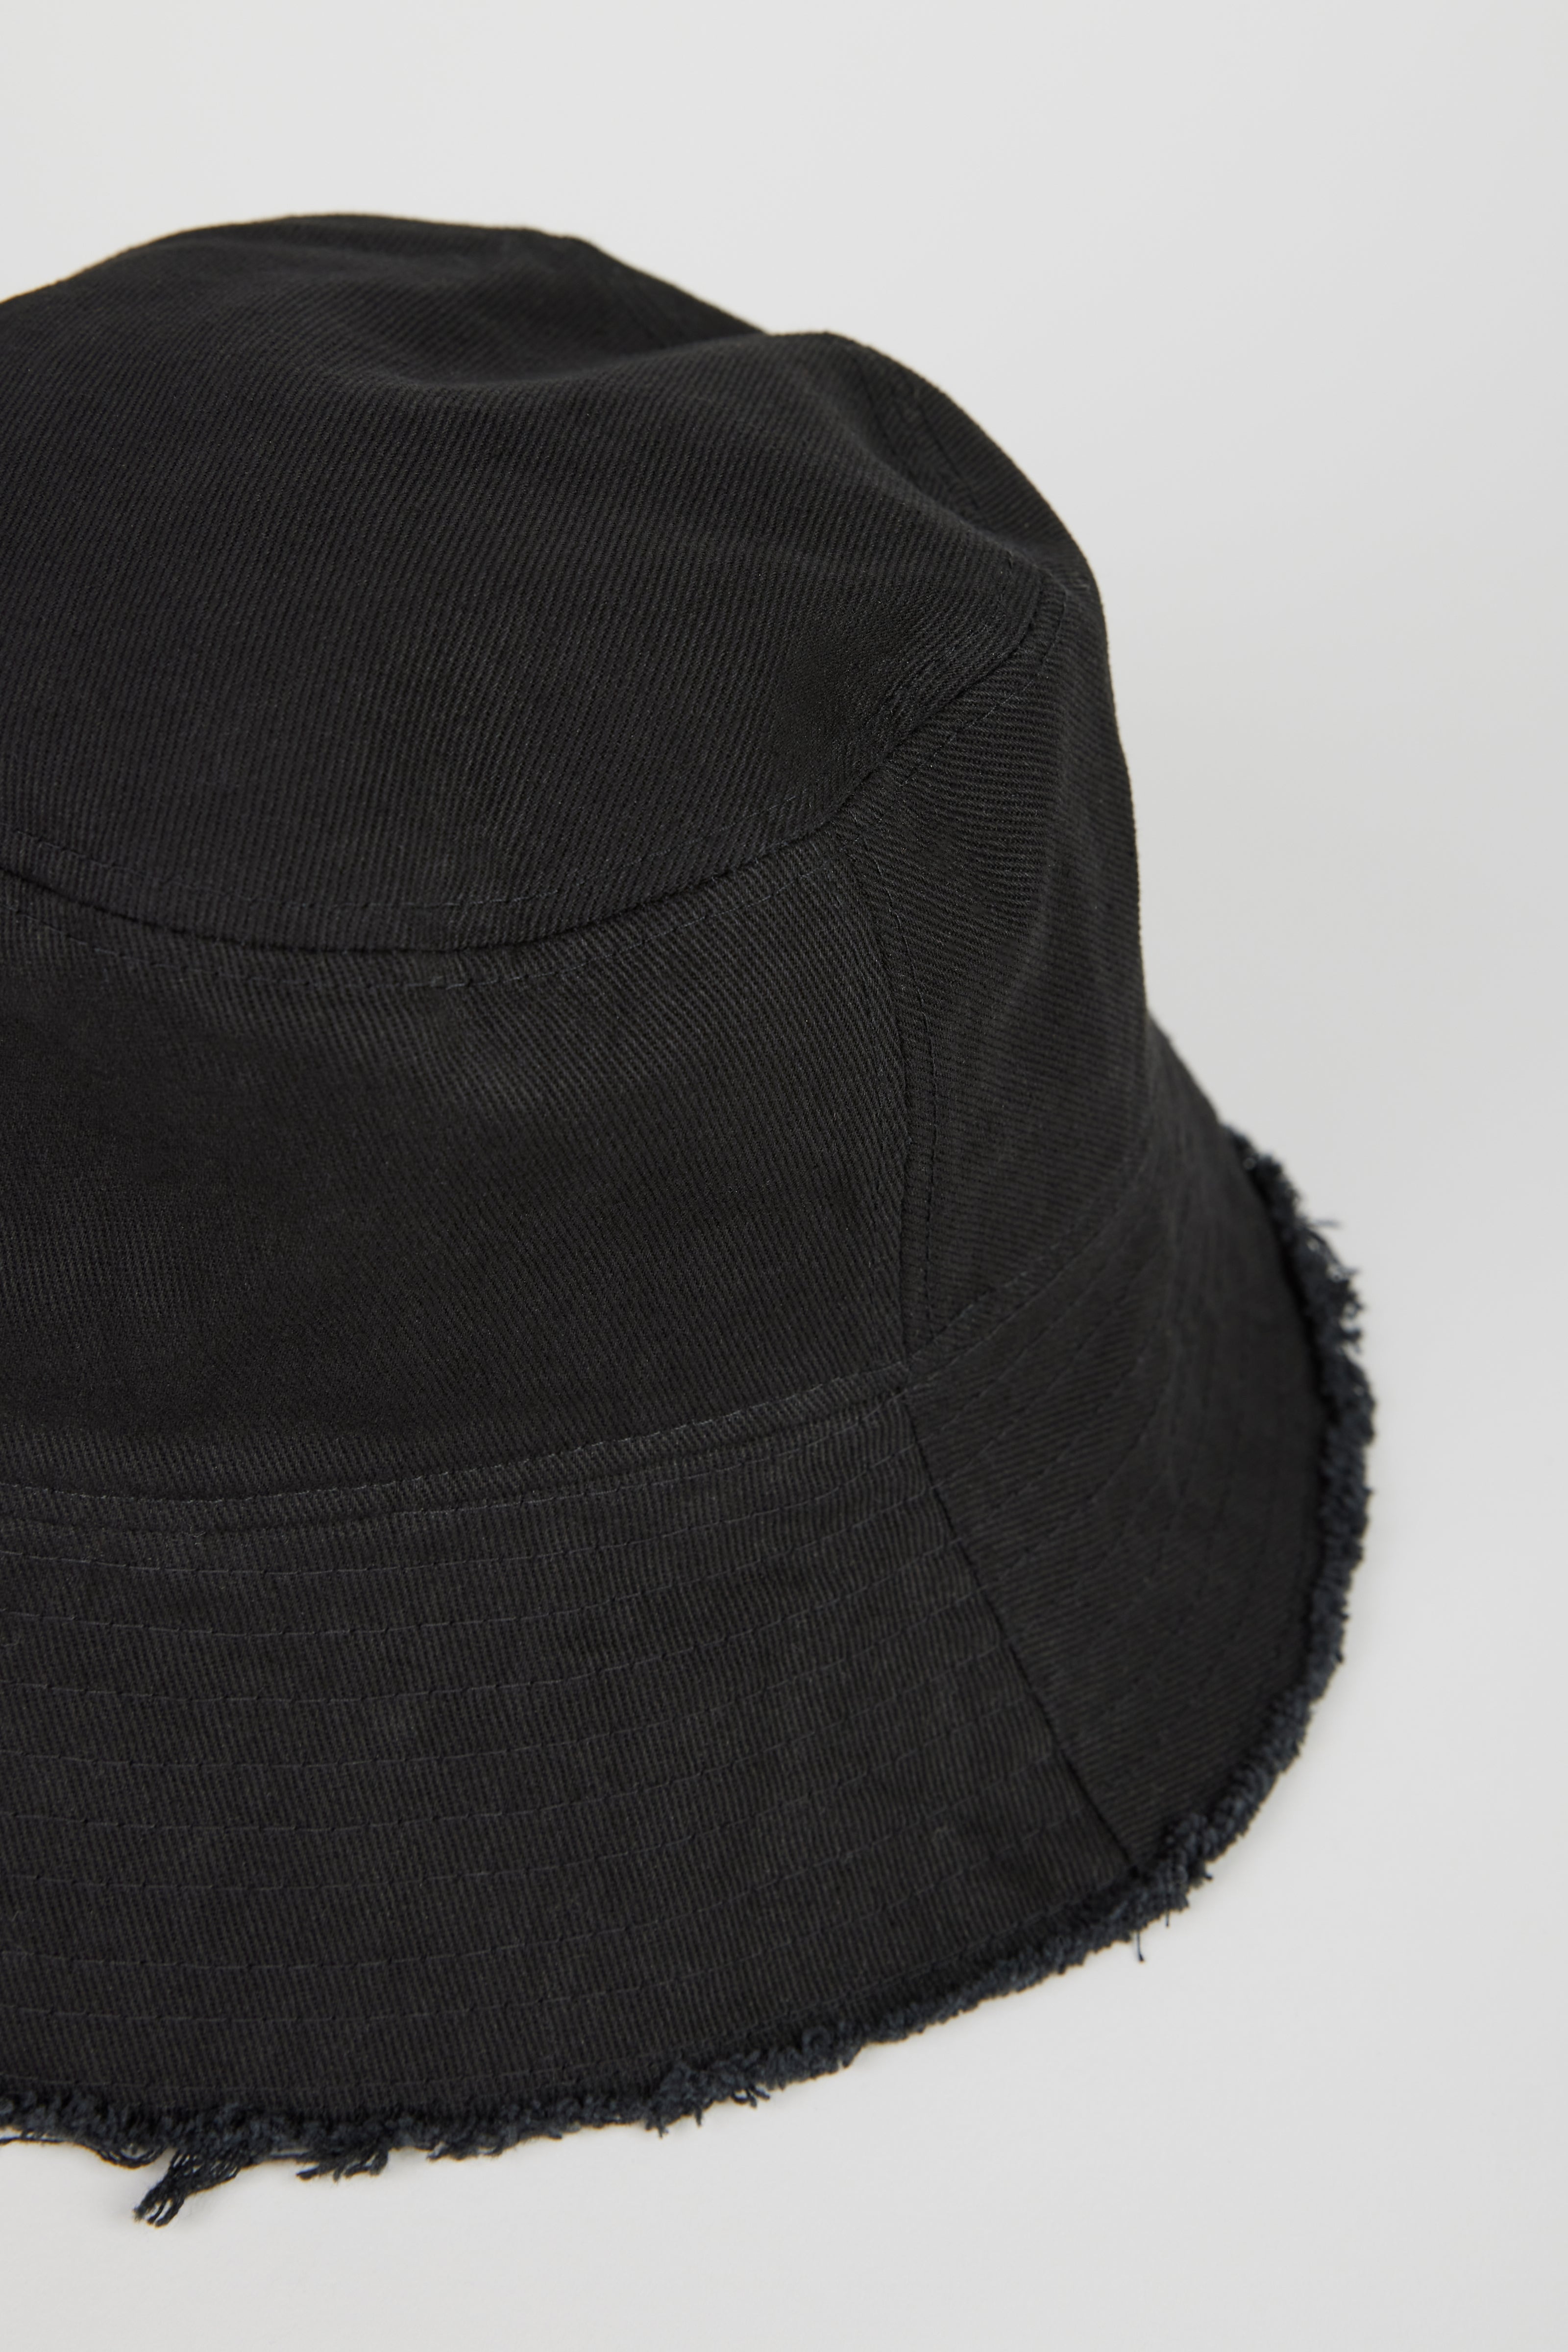 Black frayed edge bucket hat